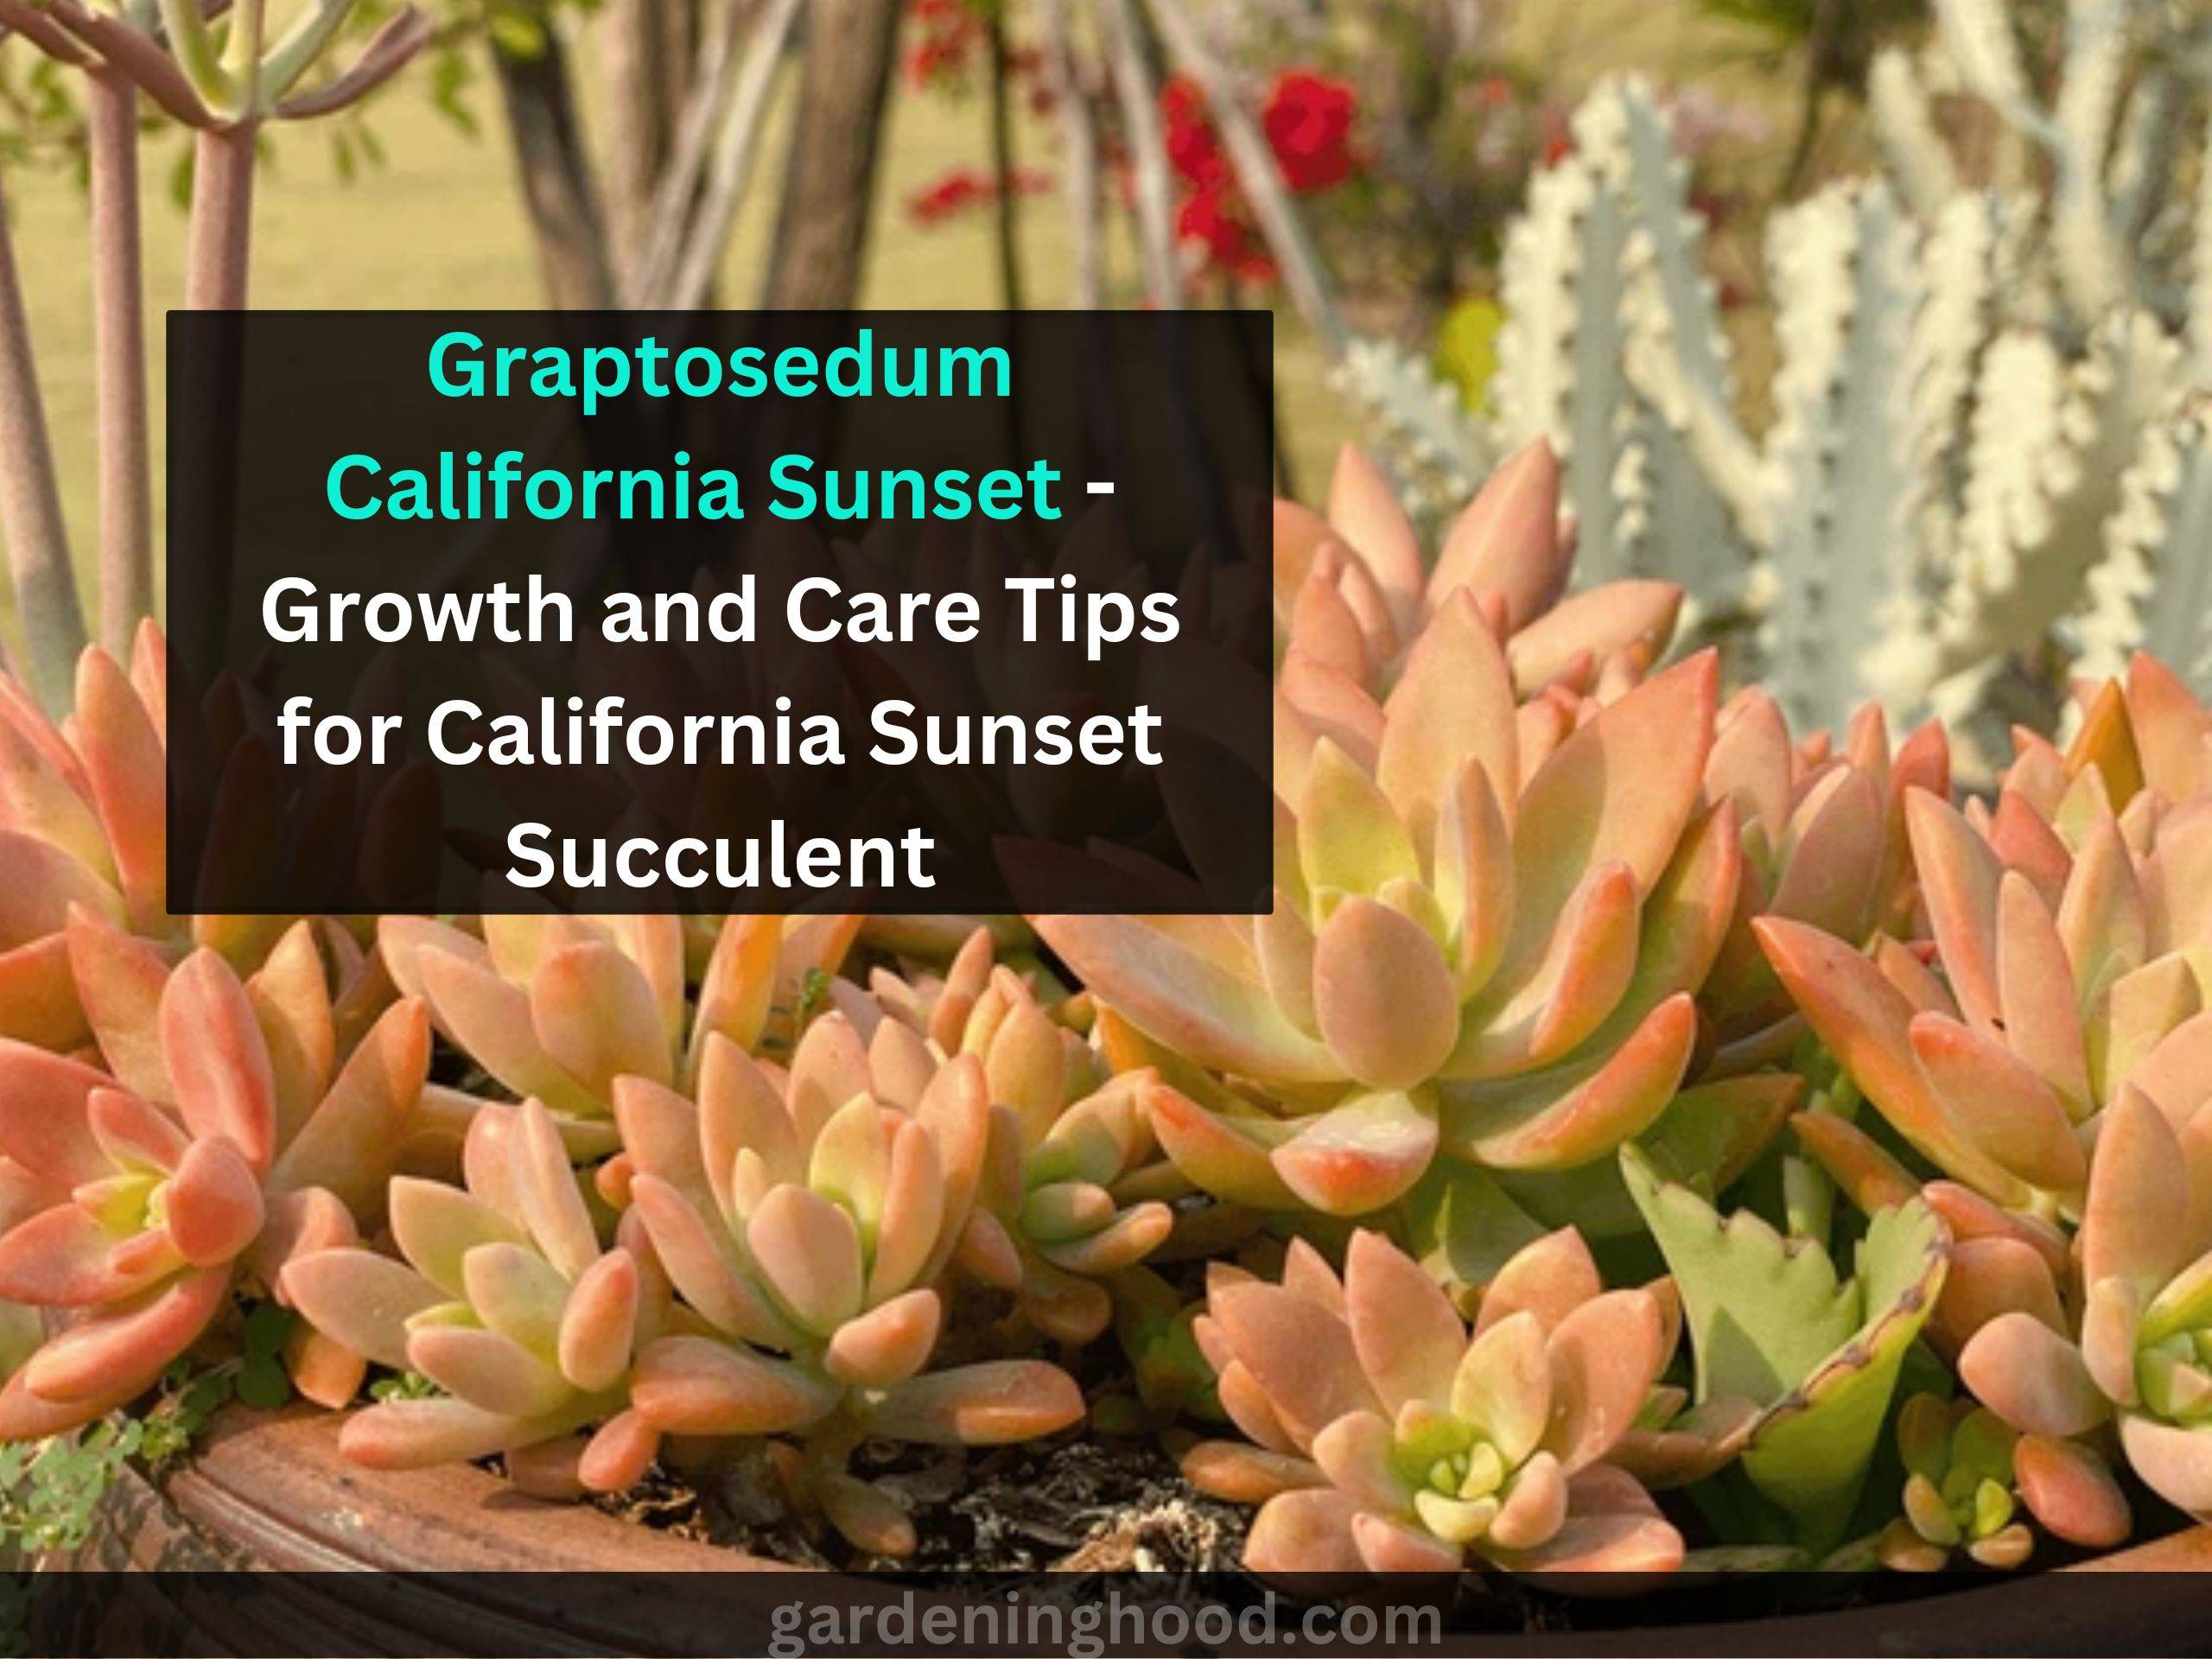 Graptosedum California Sunset - Growth and Care Tips for California Sunset Succulent